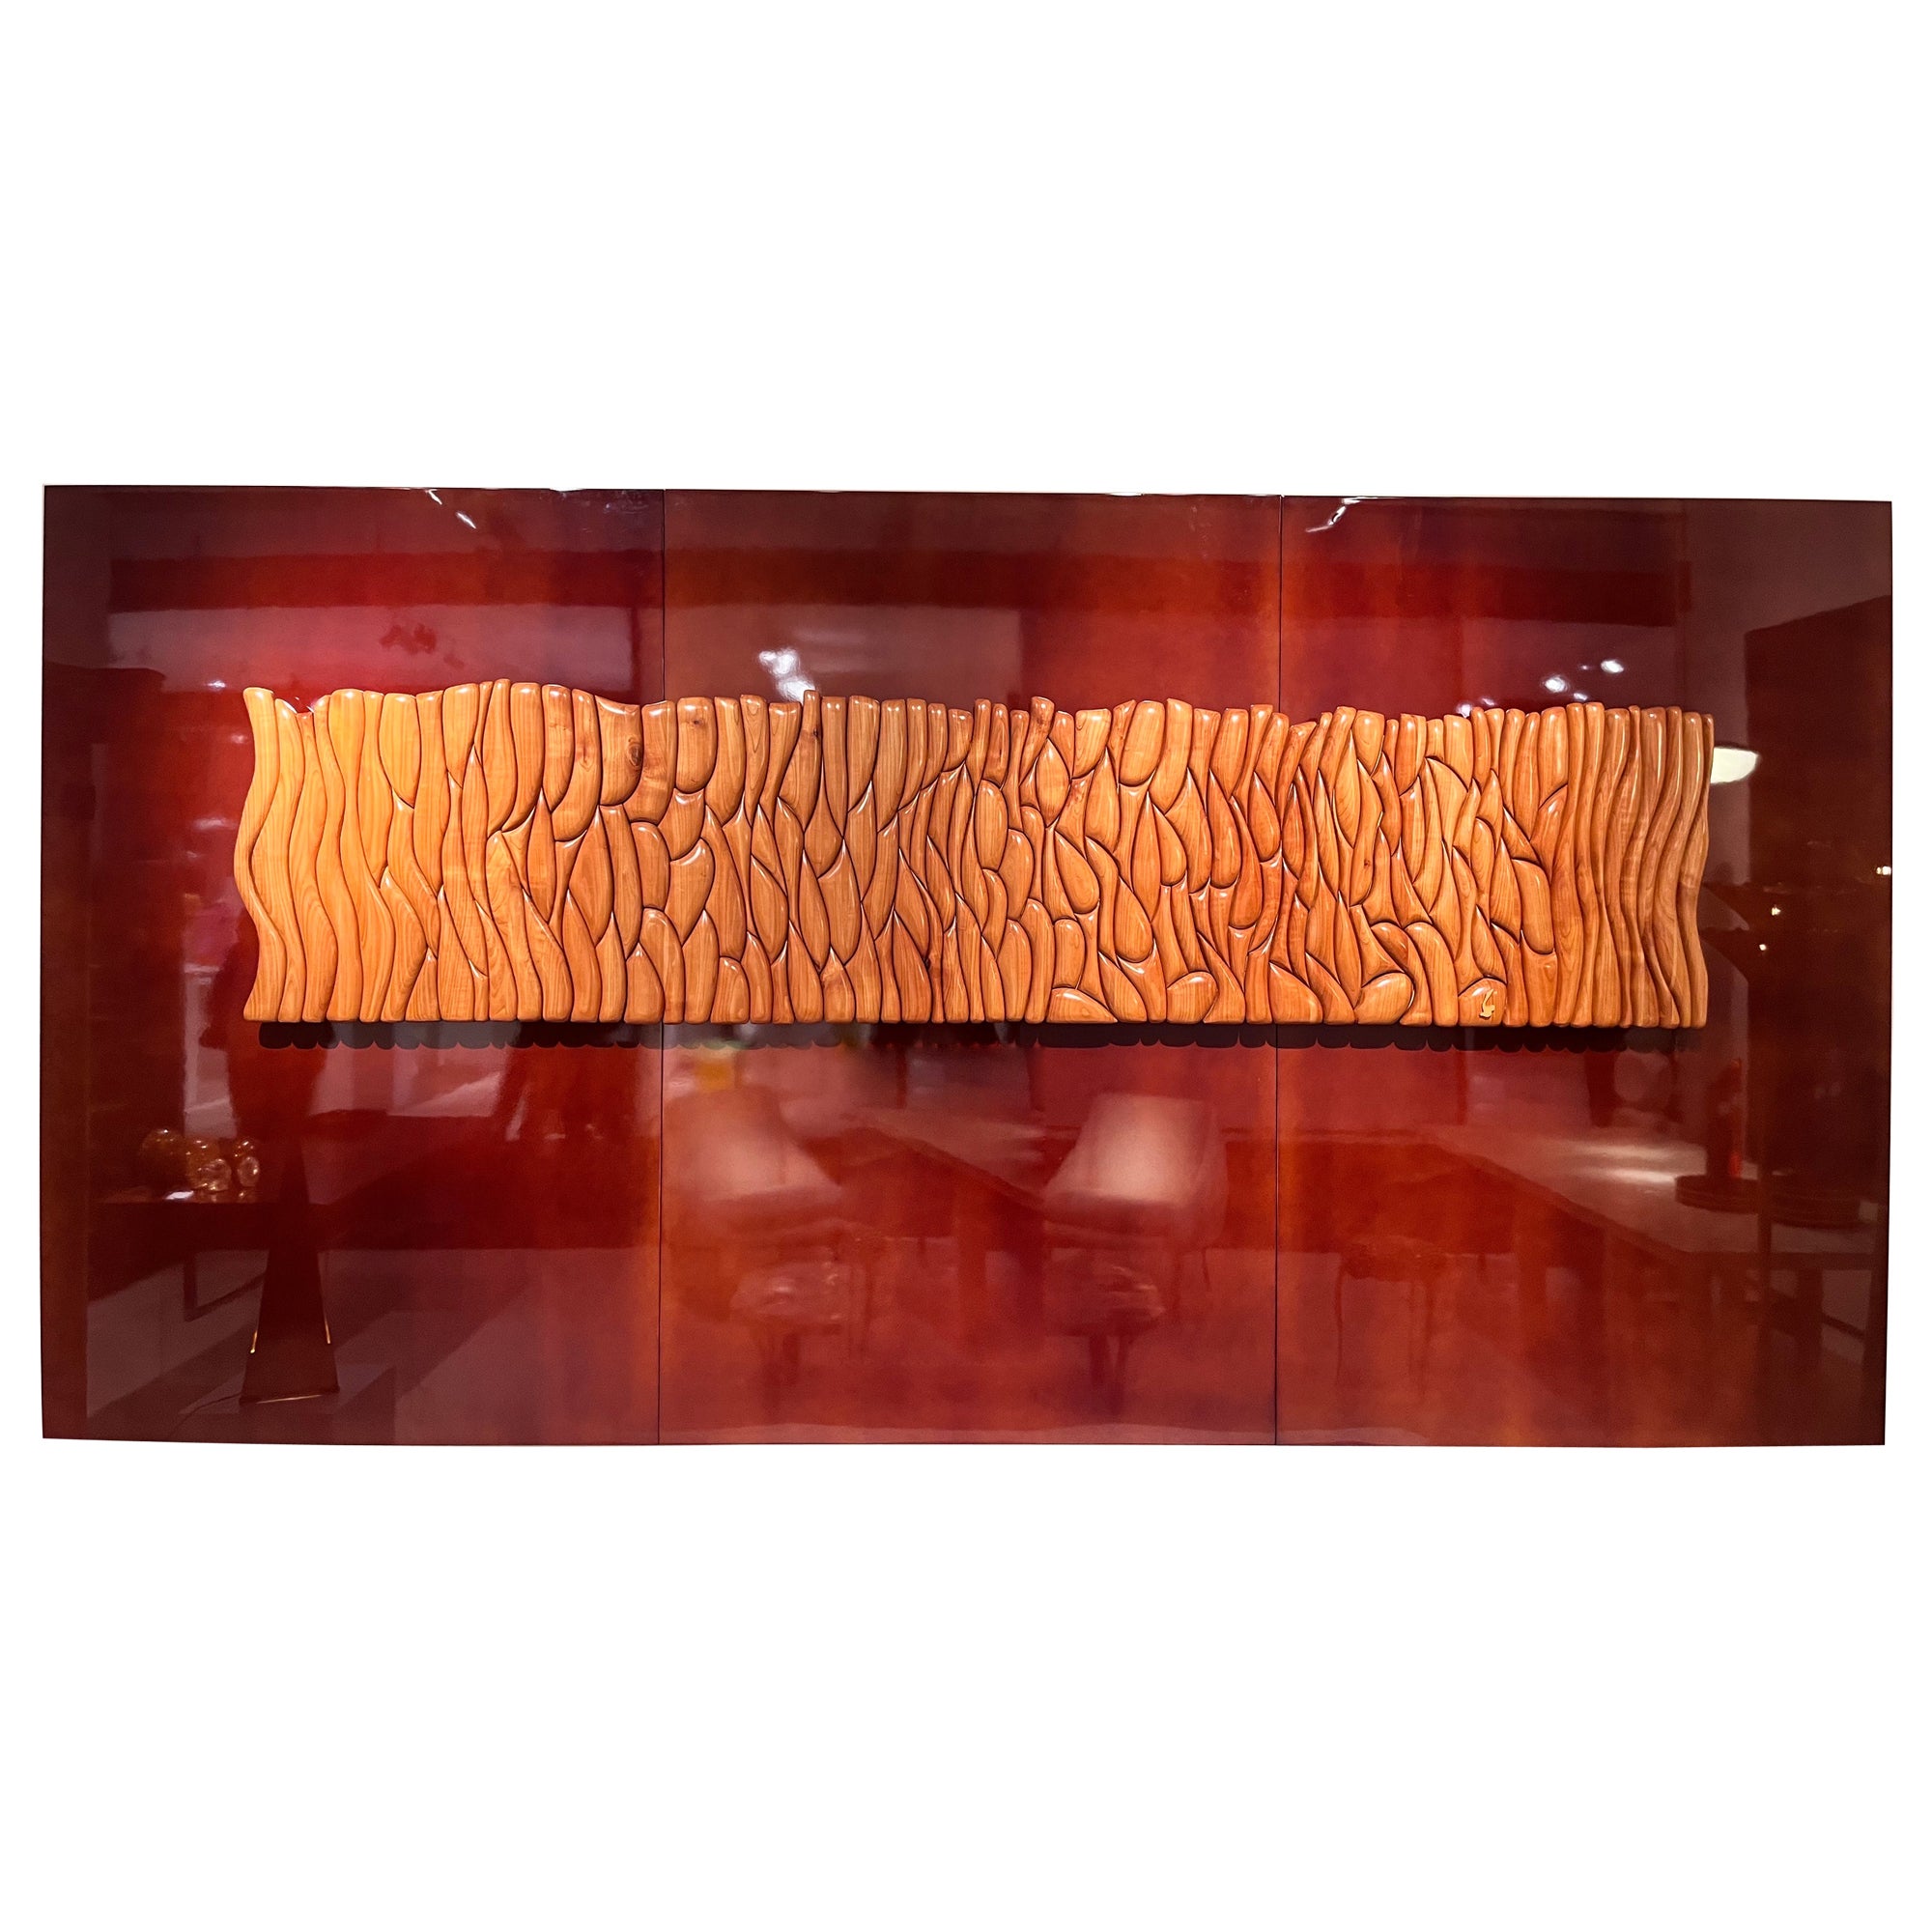 Solid ash wood sculpture panel on lacquered wood by Lucien Bénière For Sale